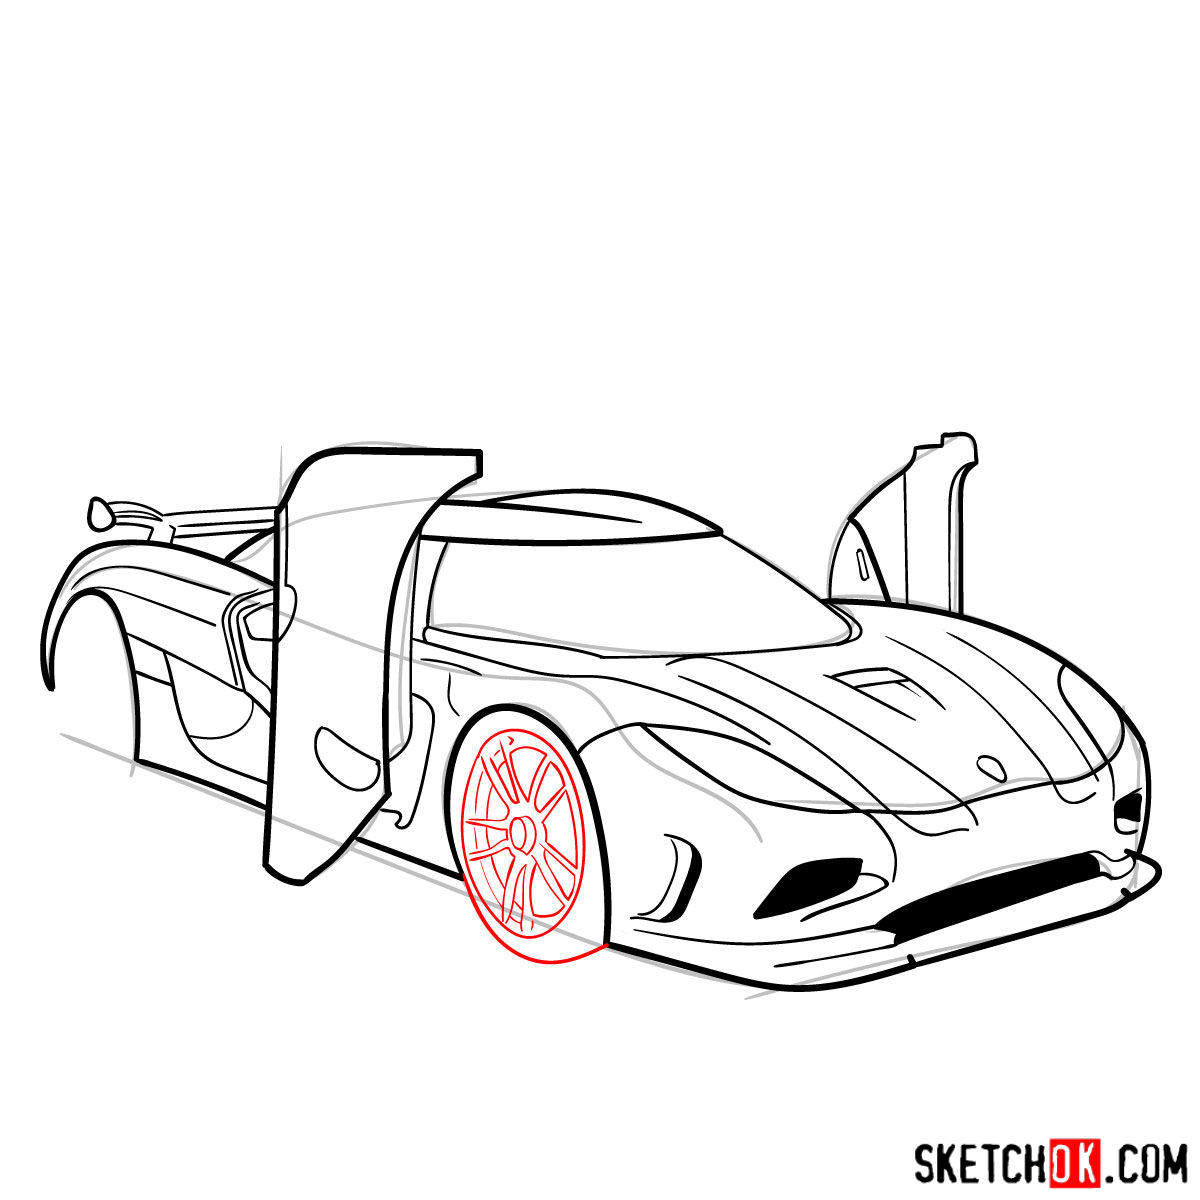 How to draw Koenigsegg Agera R Oman - step 11